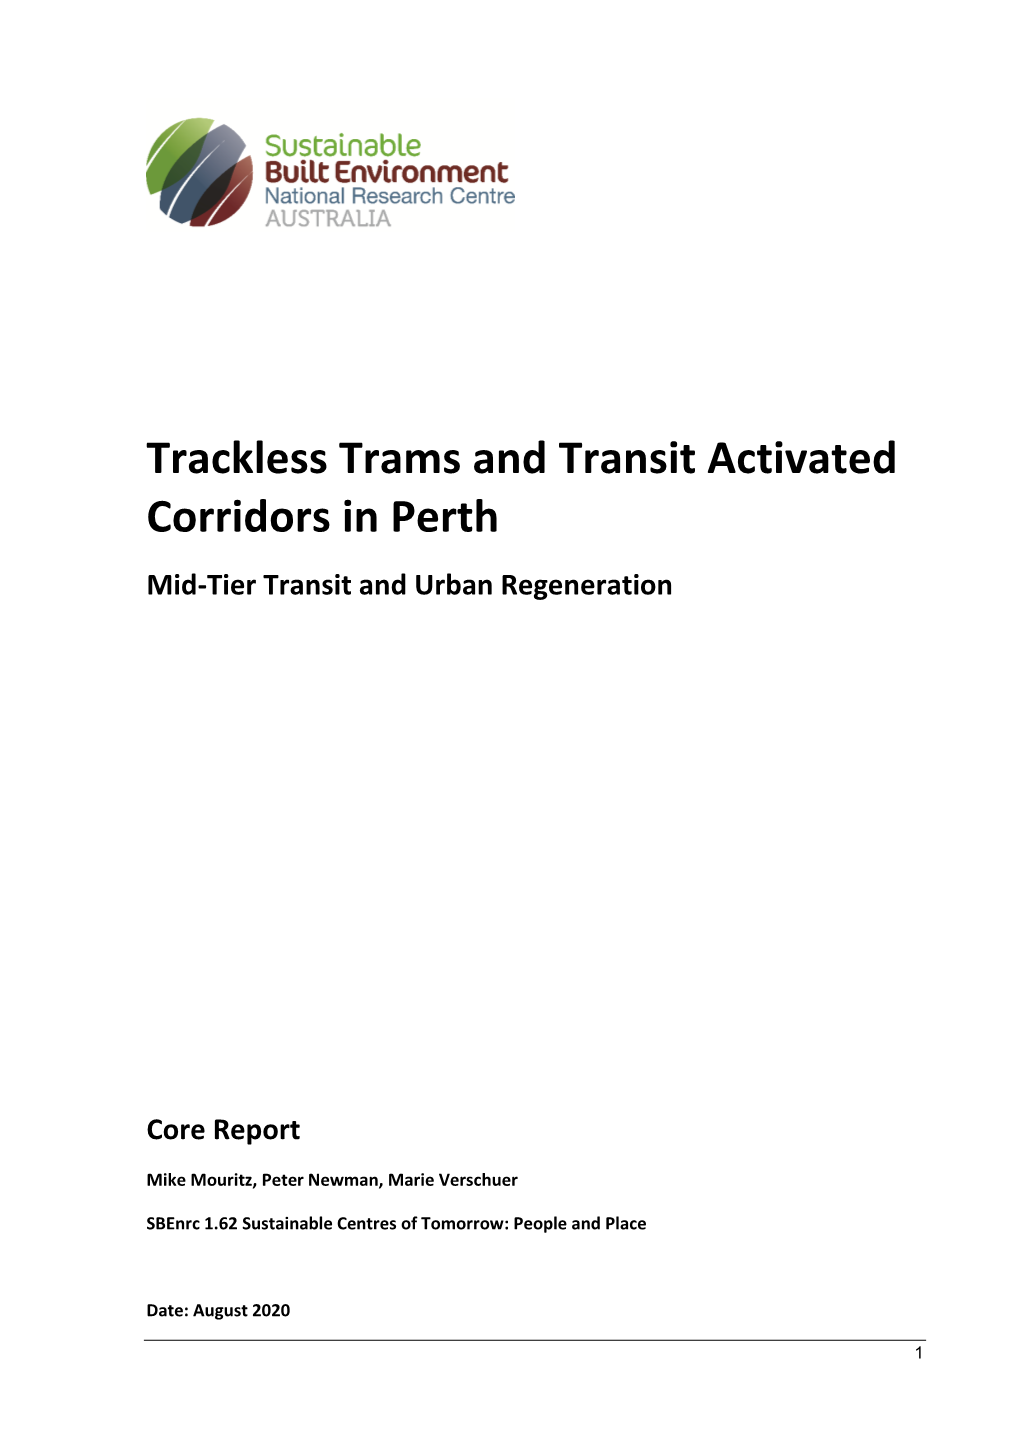 Mid-Tier Transit and Urban Regeneration – Core Report